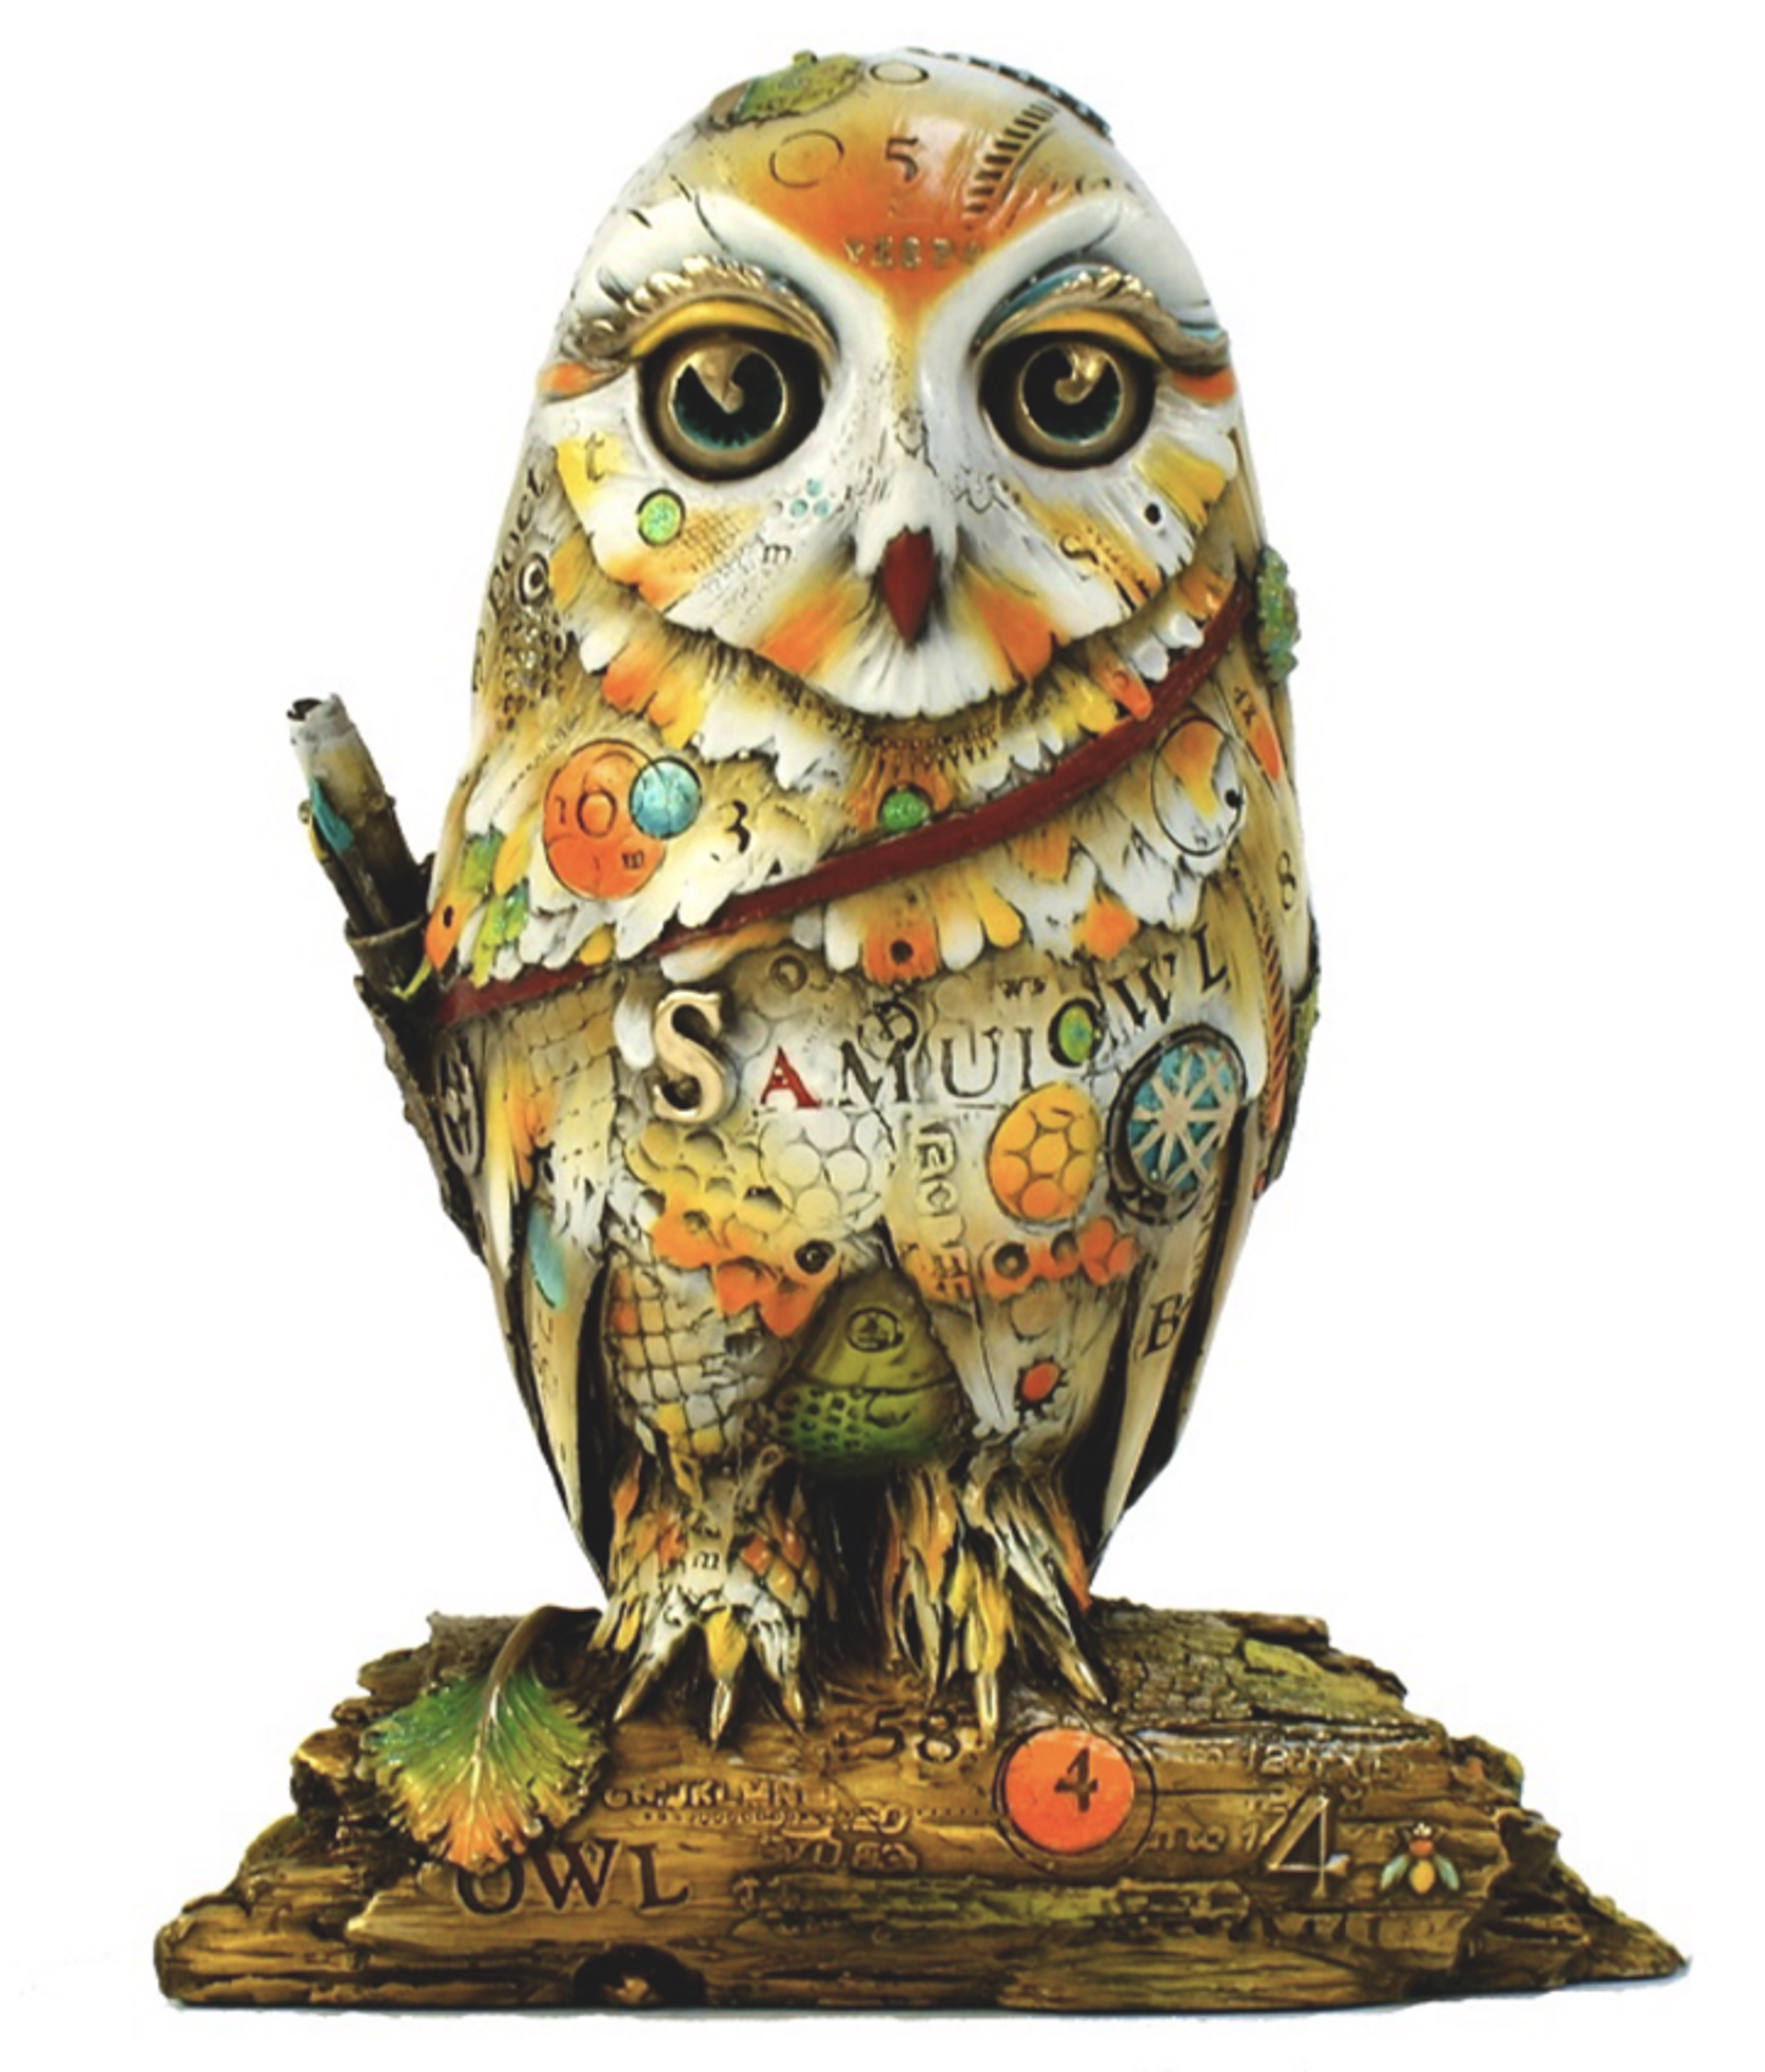 Samuel the Poet (Small) by Nano Lopez